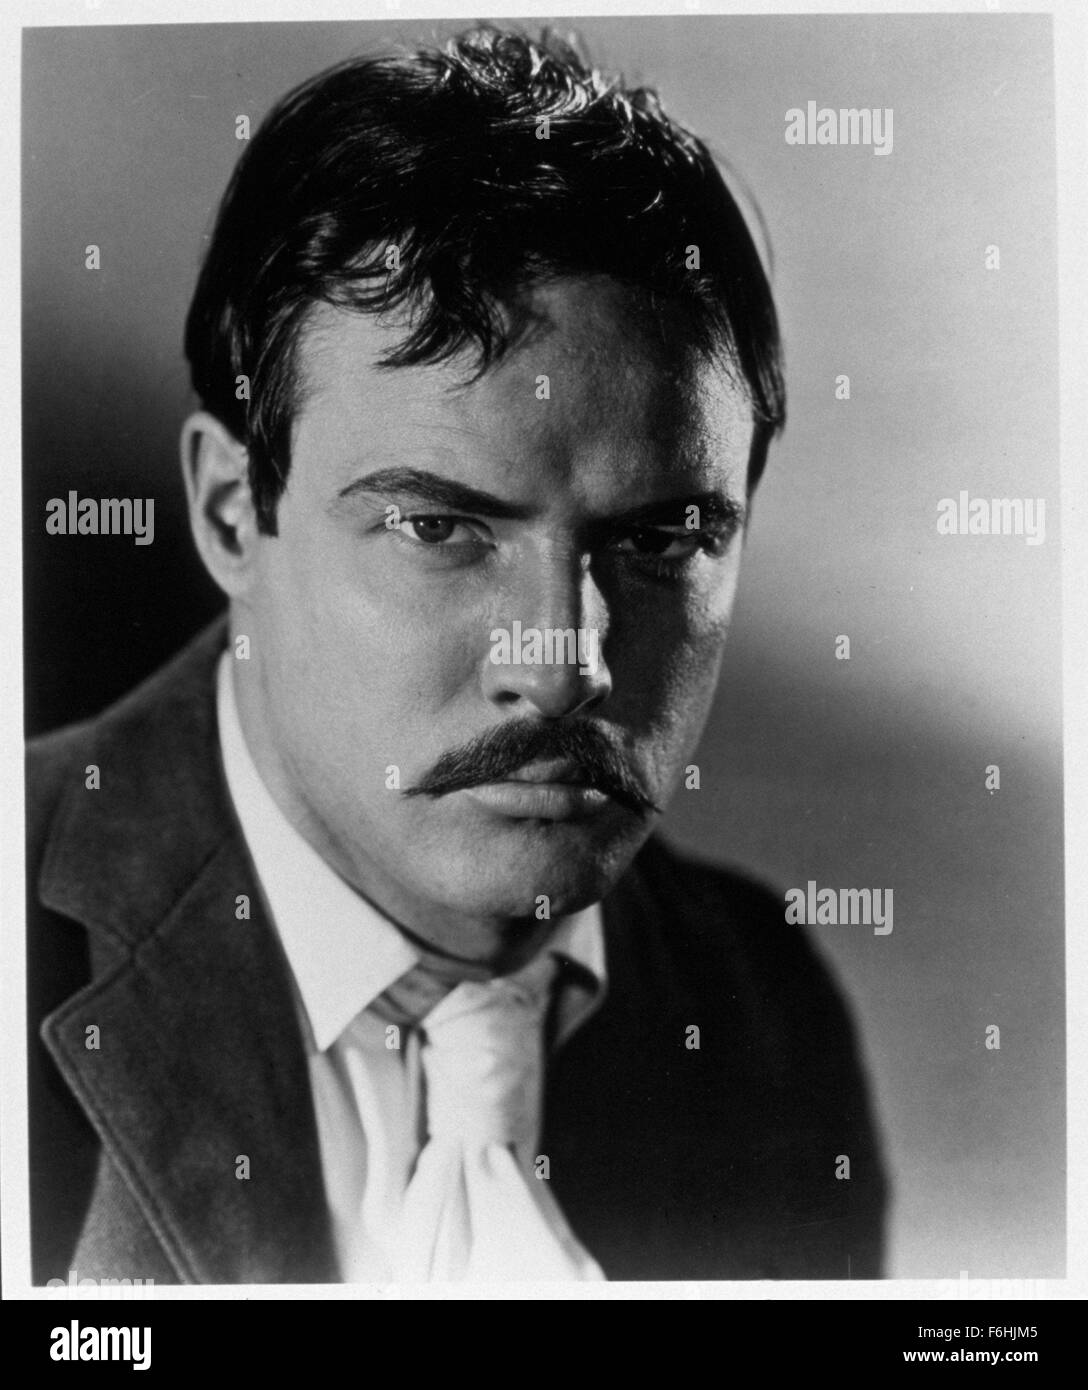 Zapata moustache Black and White Stock Photos & Images - Alamy